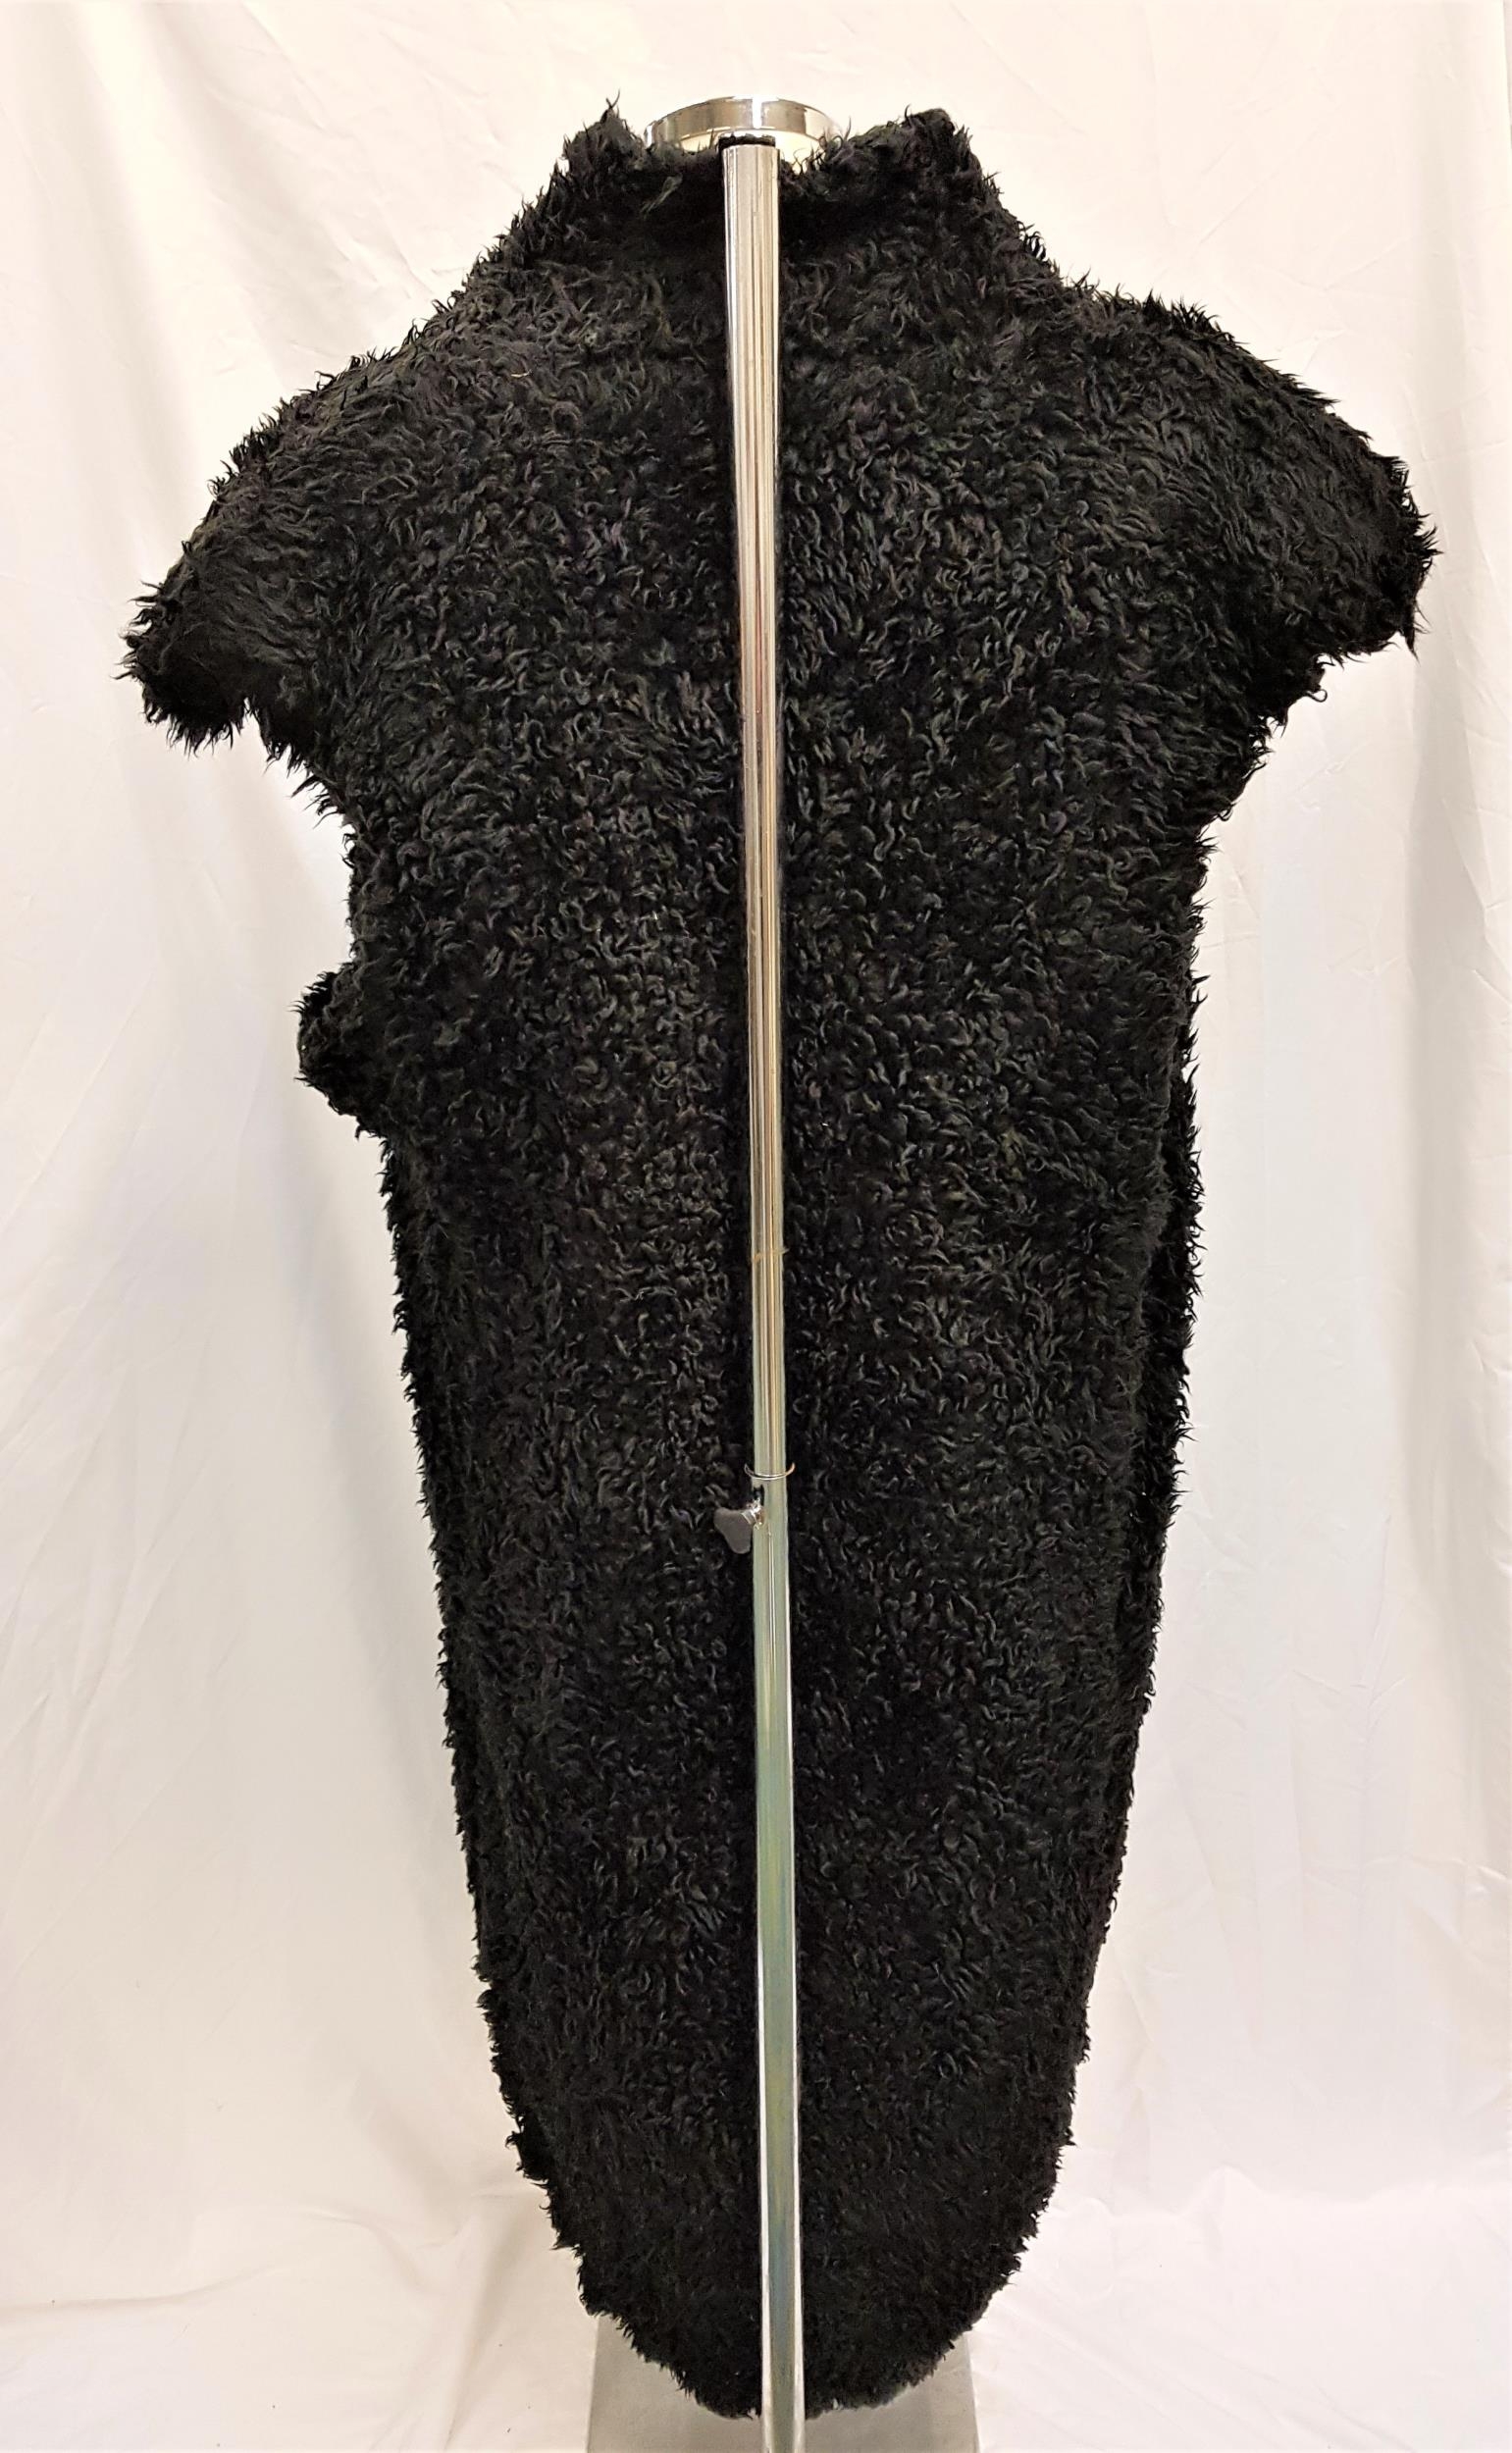 THE FLINTSTONES (1994/2000) - MEN'S FAUX FUR COSTUME the large black faux fur sleeveless coat with a - Image 2 of 5